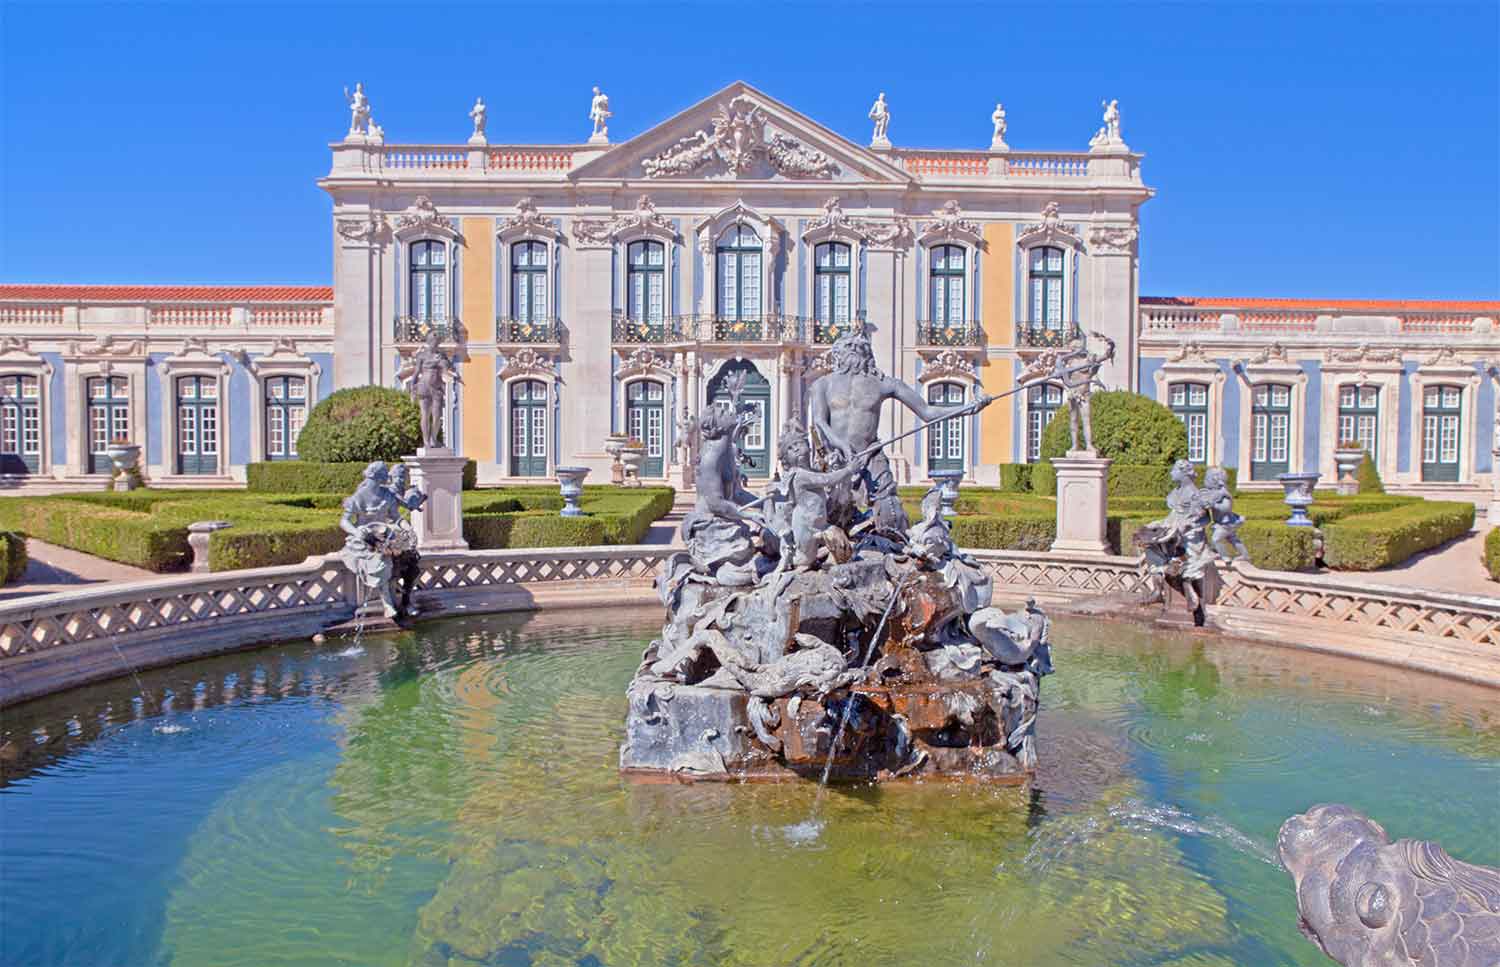 Queluz Palace - Portugal